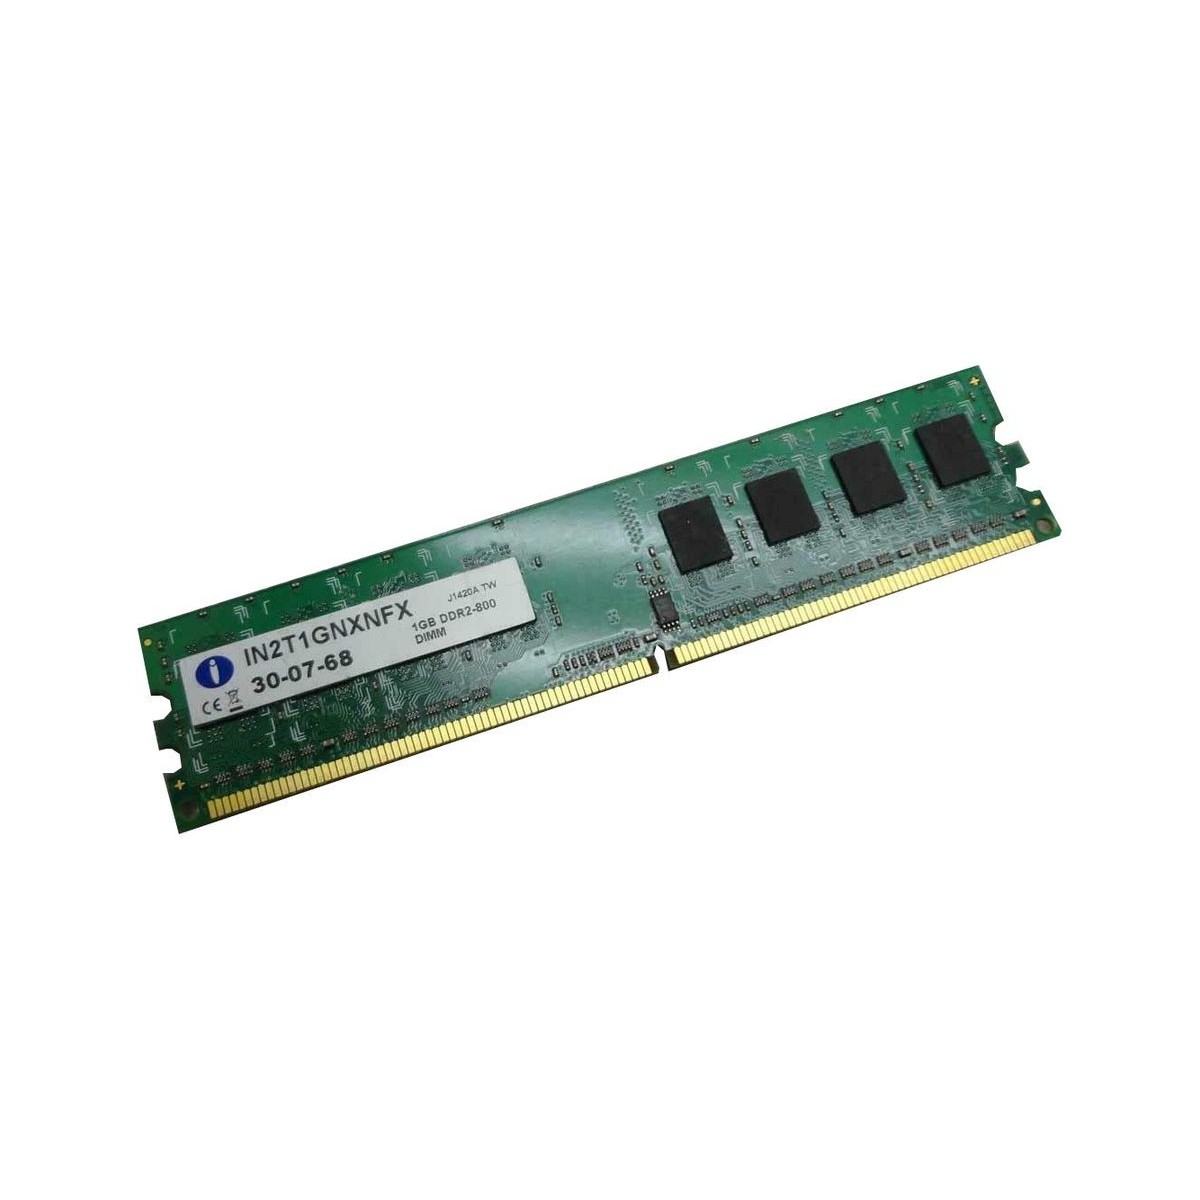 INTEGRAL 1GB PC2-6400 DDR2-800 DIMM IN2T1GNXNFX